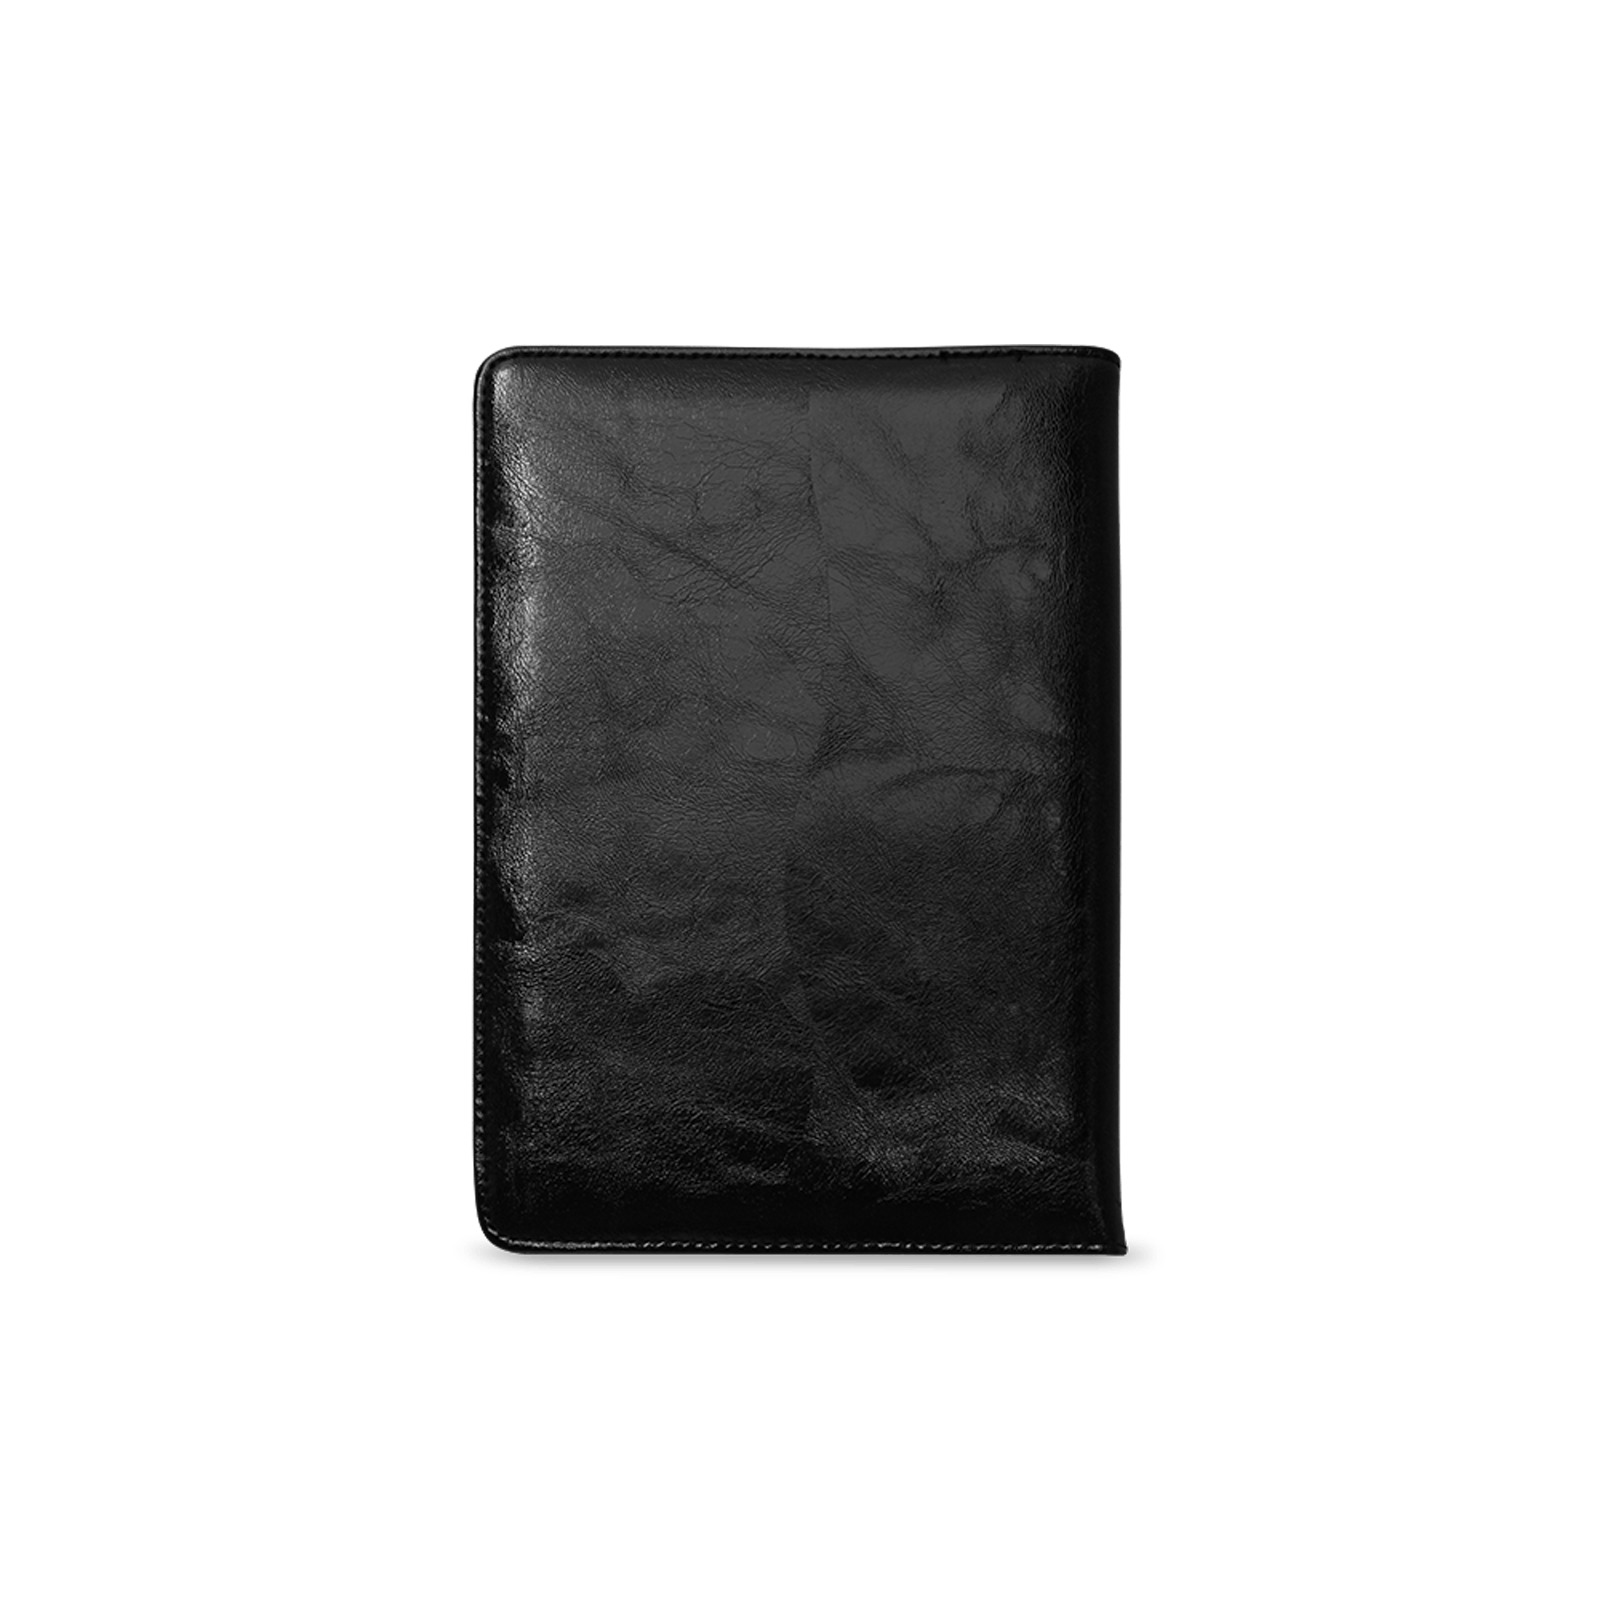 Black Girl Stroke Magic Notebook Custom NoteBook A5